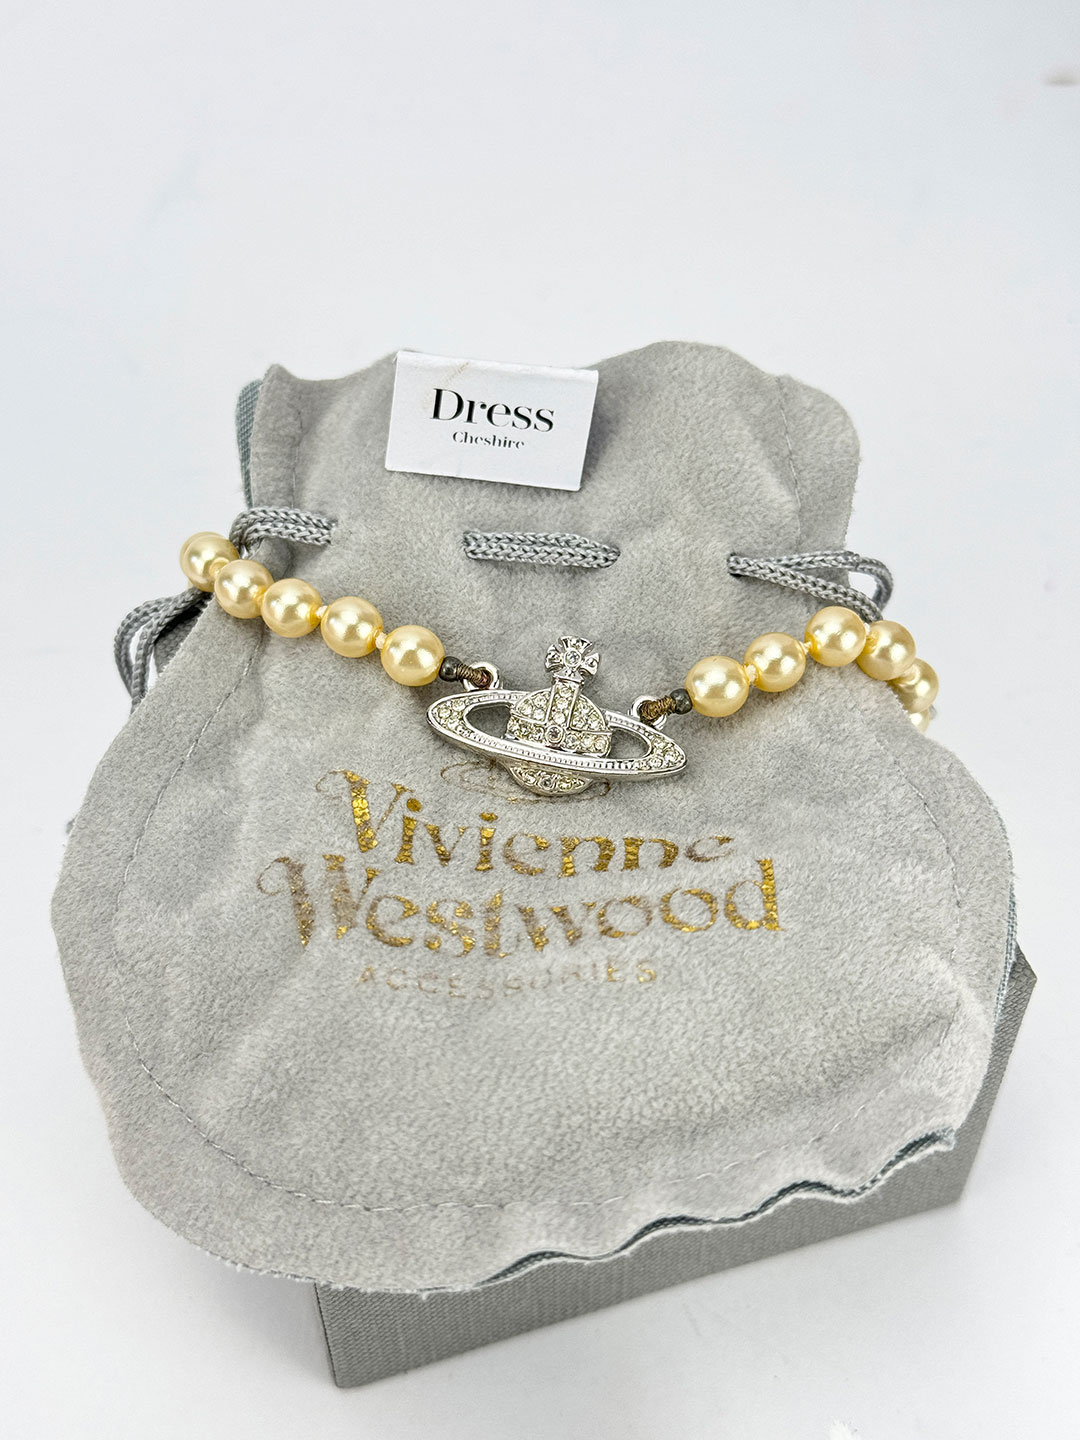 Vivienne Westwood Pearl Necklace - Dress Cheshire | Preloved Designer ...